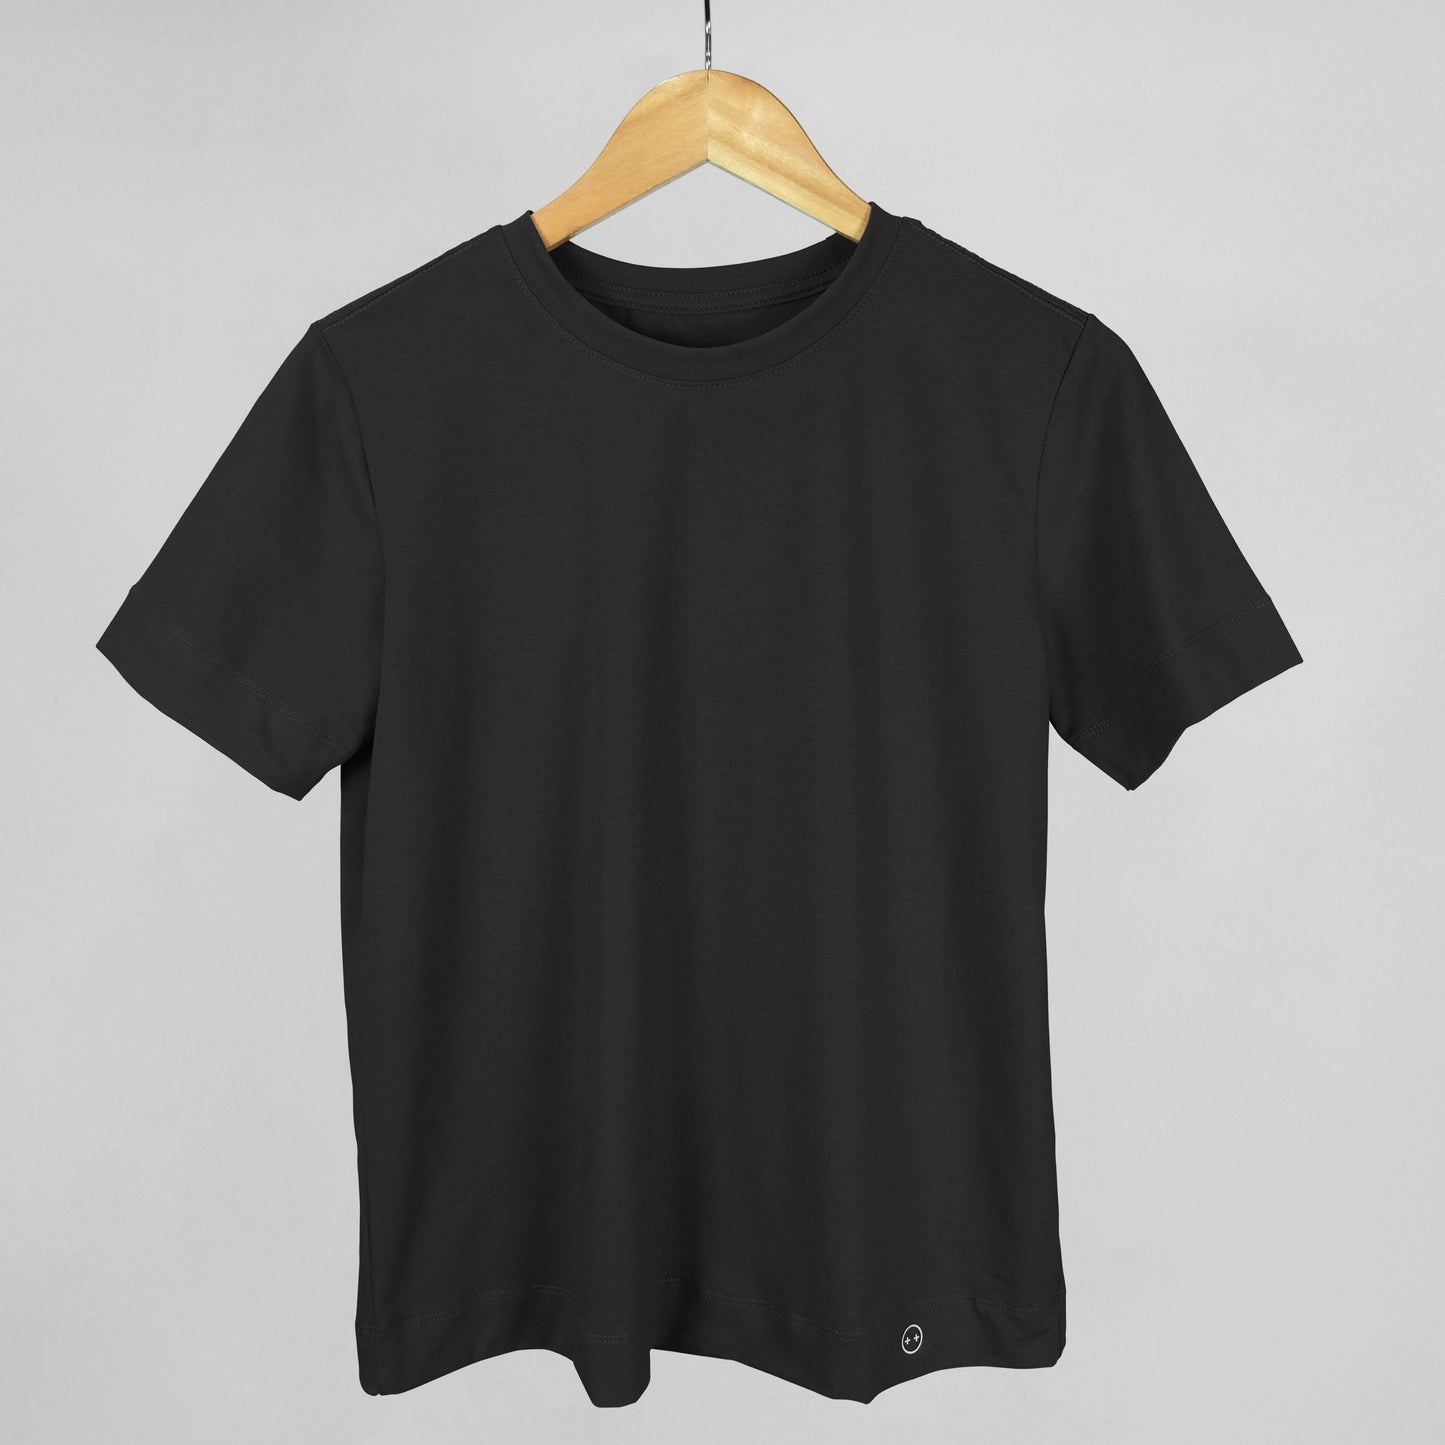 Camiseta manga corta cuello redondo color negro